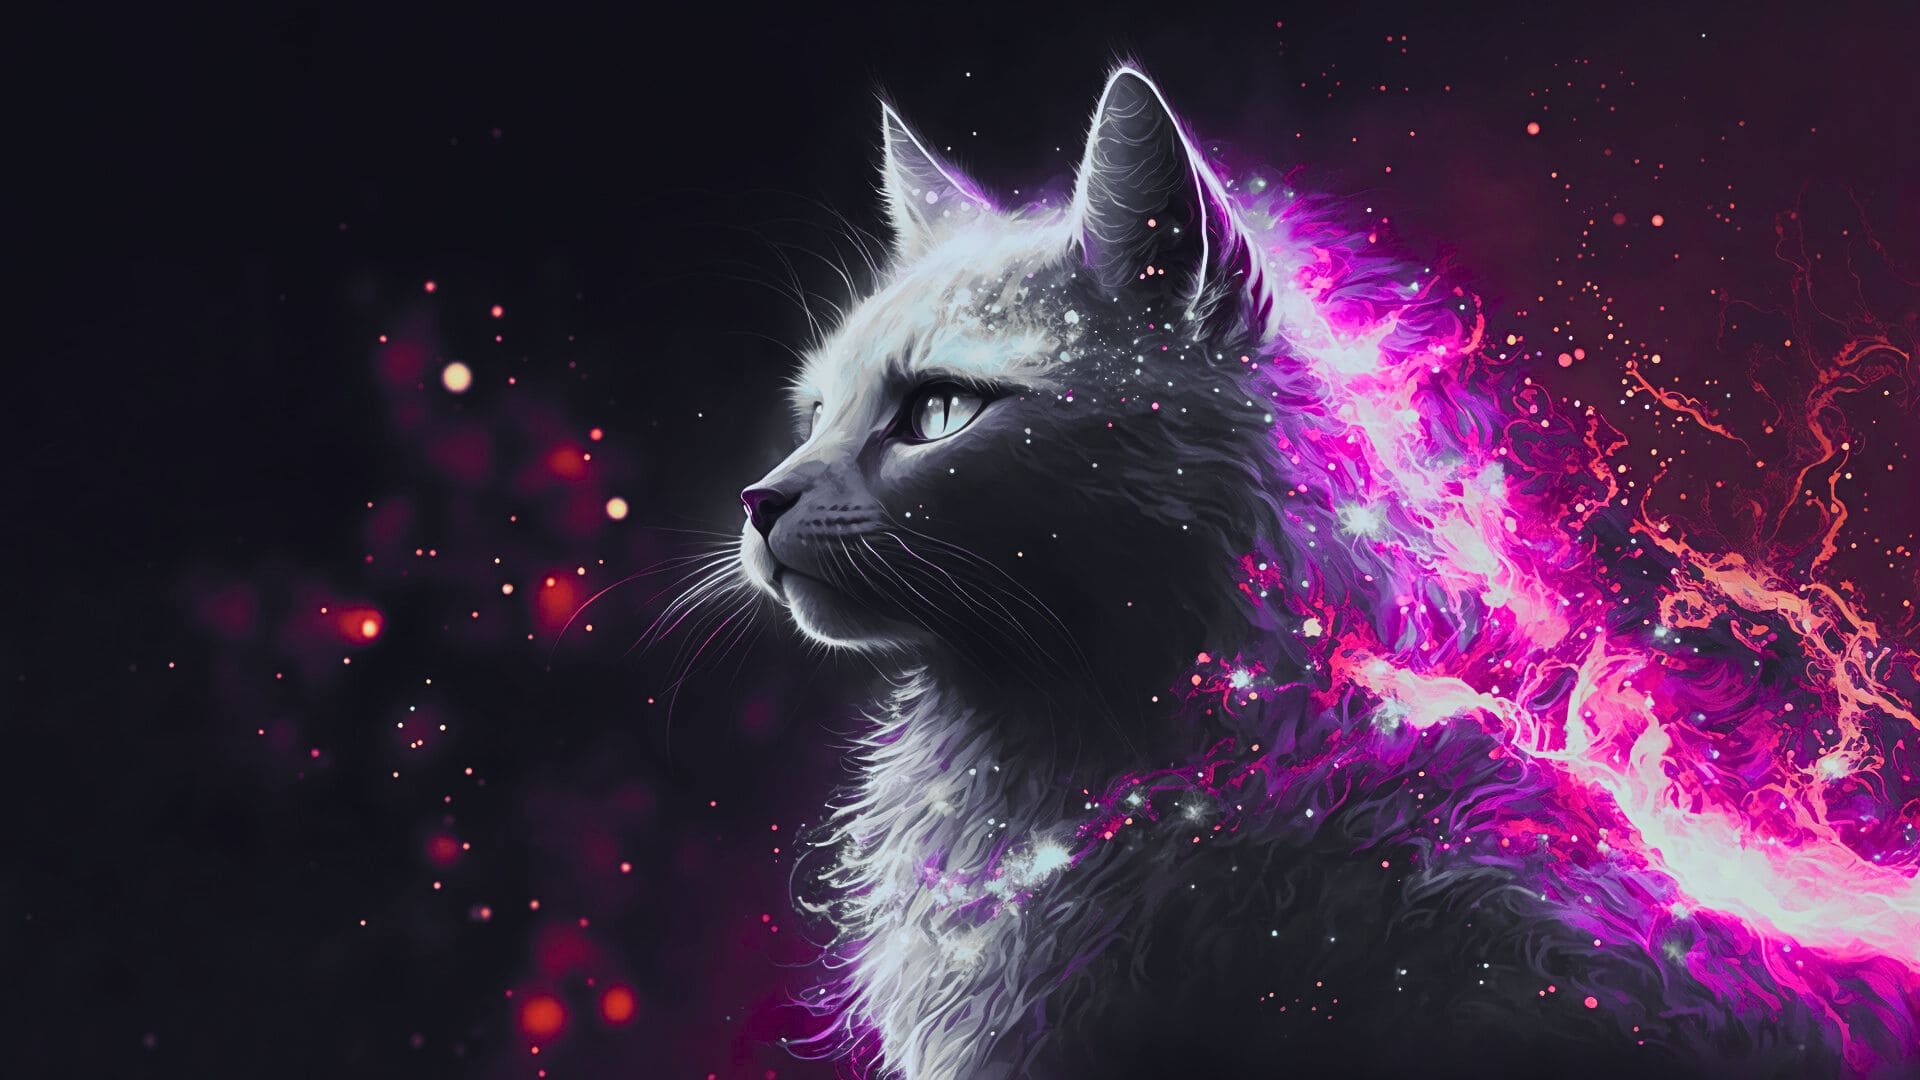 Cat Desktop Wallpaper